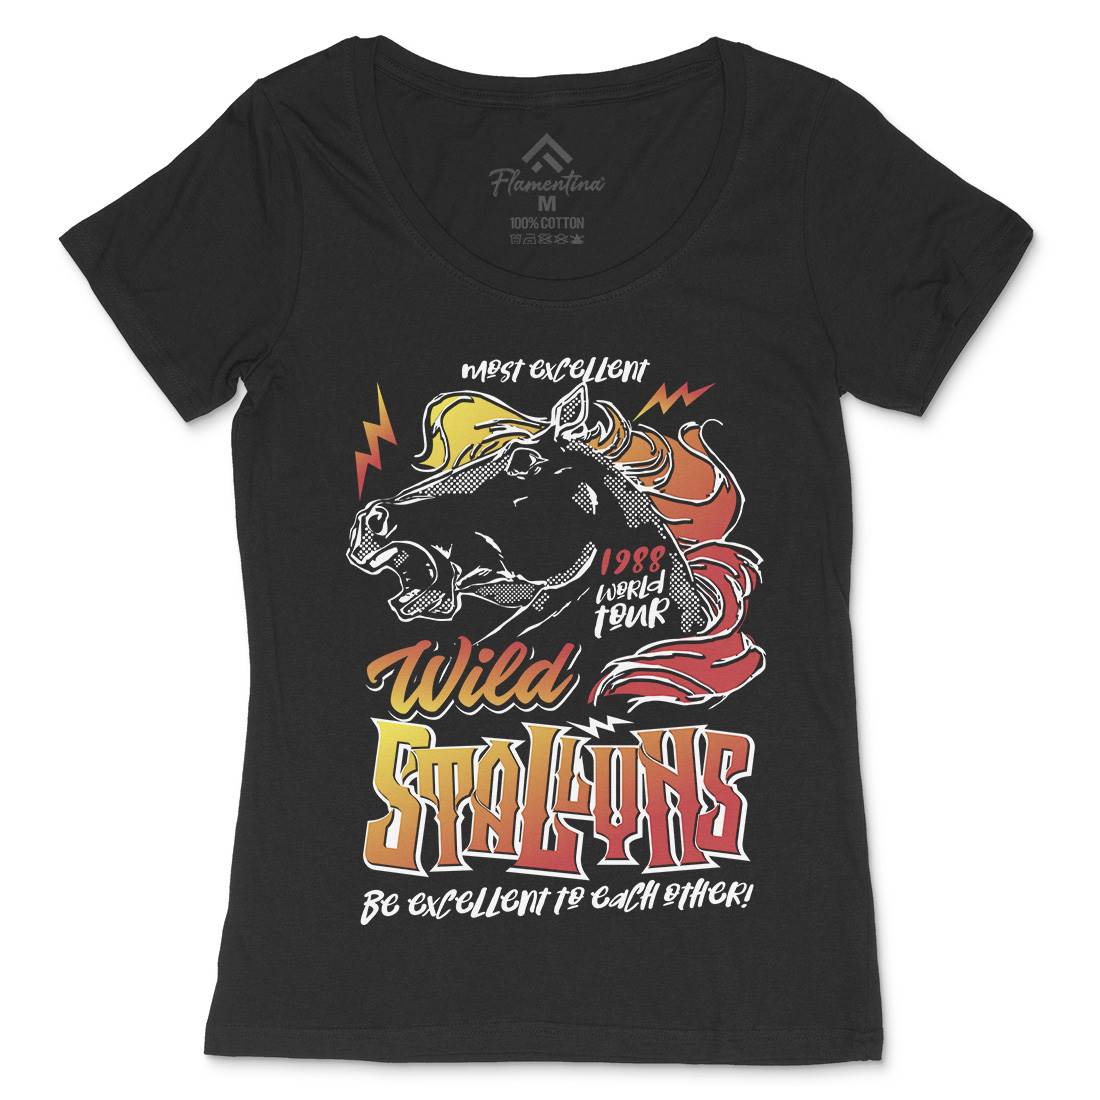 Wyld Stallyns Womens Scoop Neck T-Shirt Music D156